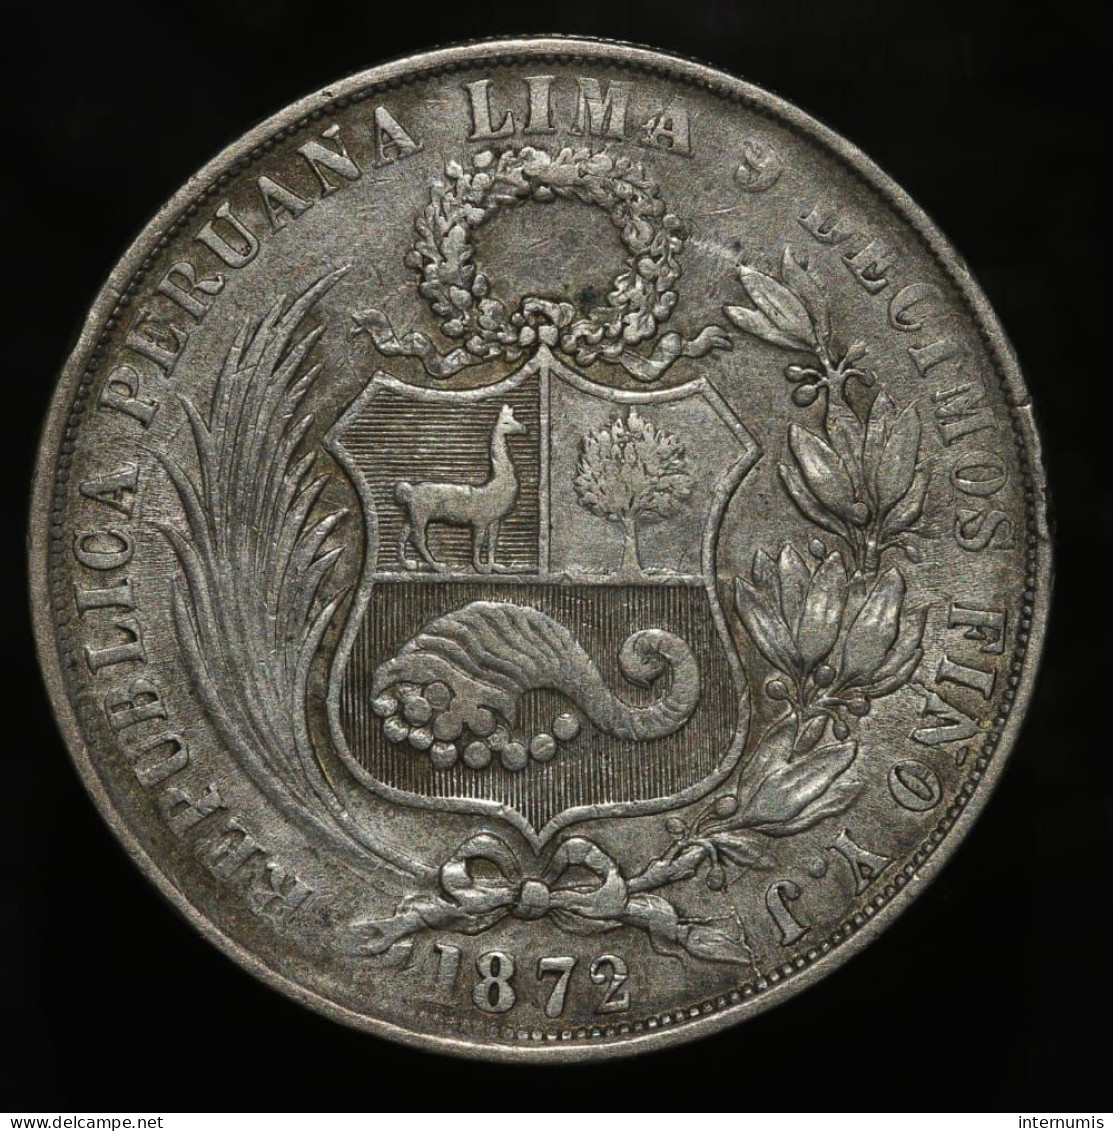 MONNAIE FAUTEE - ERROR COIN : Perou / Peru, 1 Sol, 1872, YJ  - Lima, Argent (Silver), TTB (EF), KM#196.3 - Perú